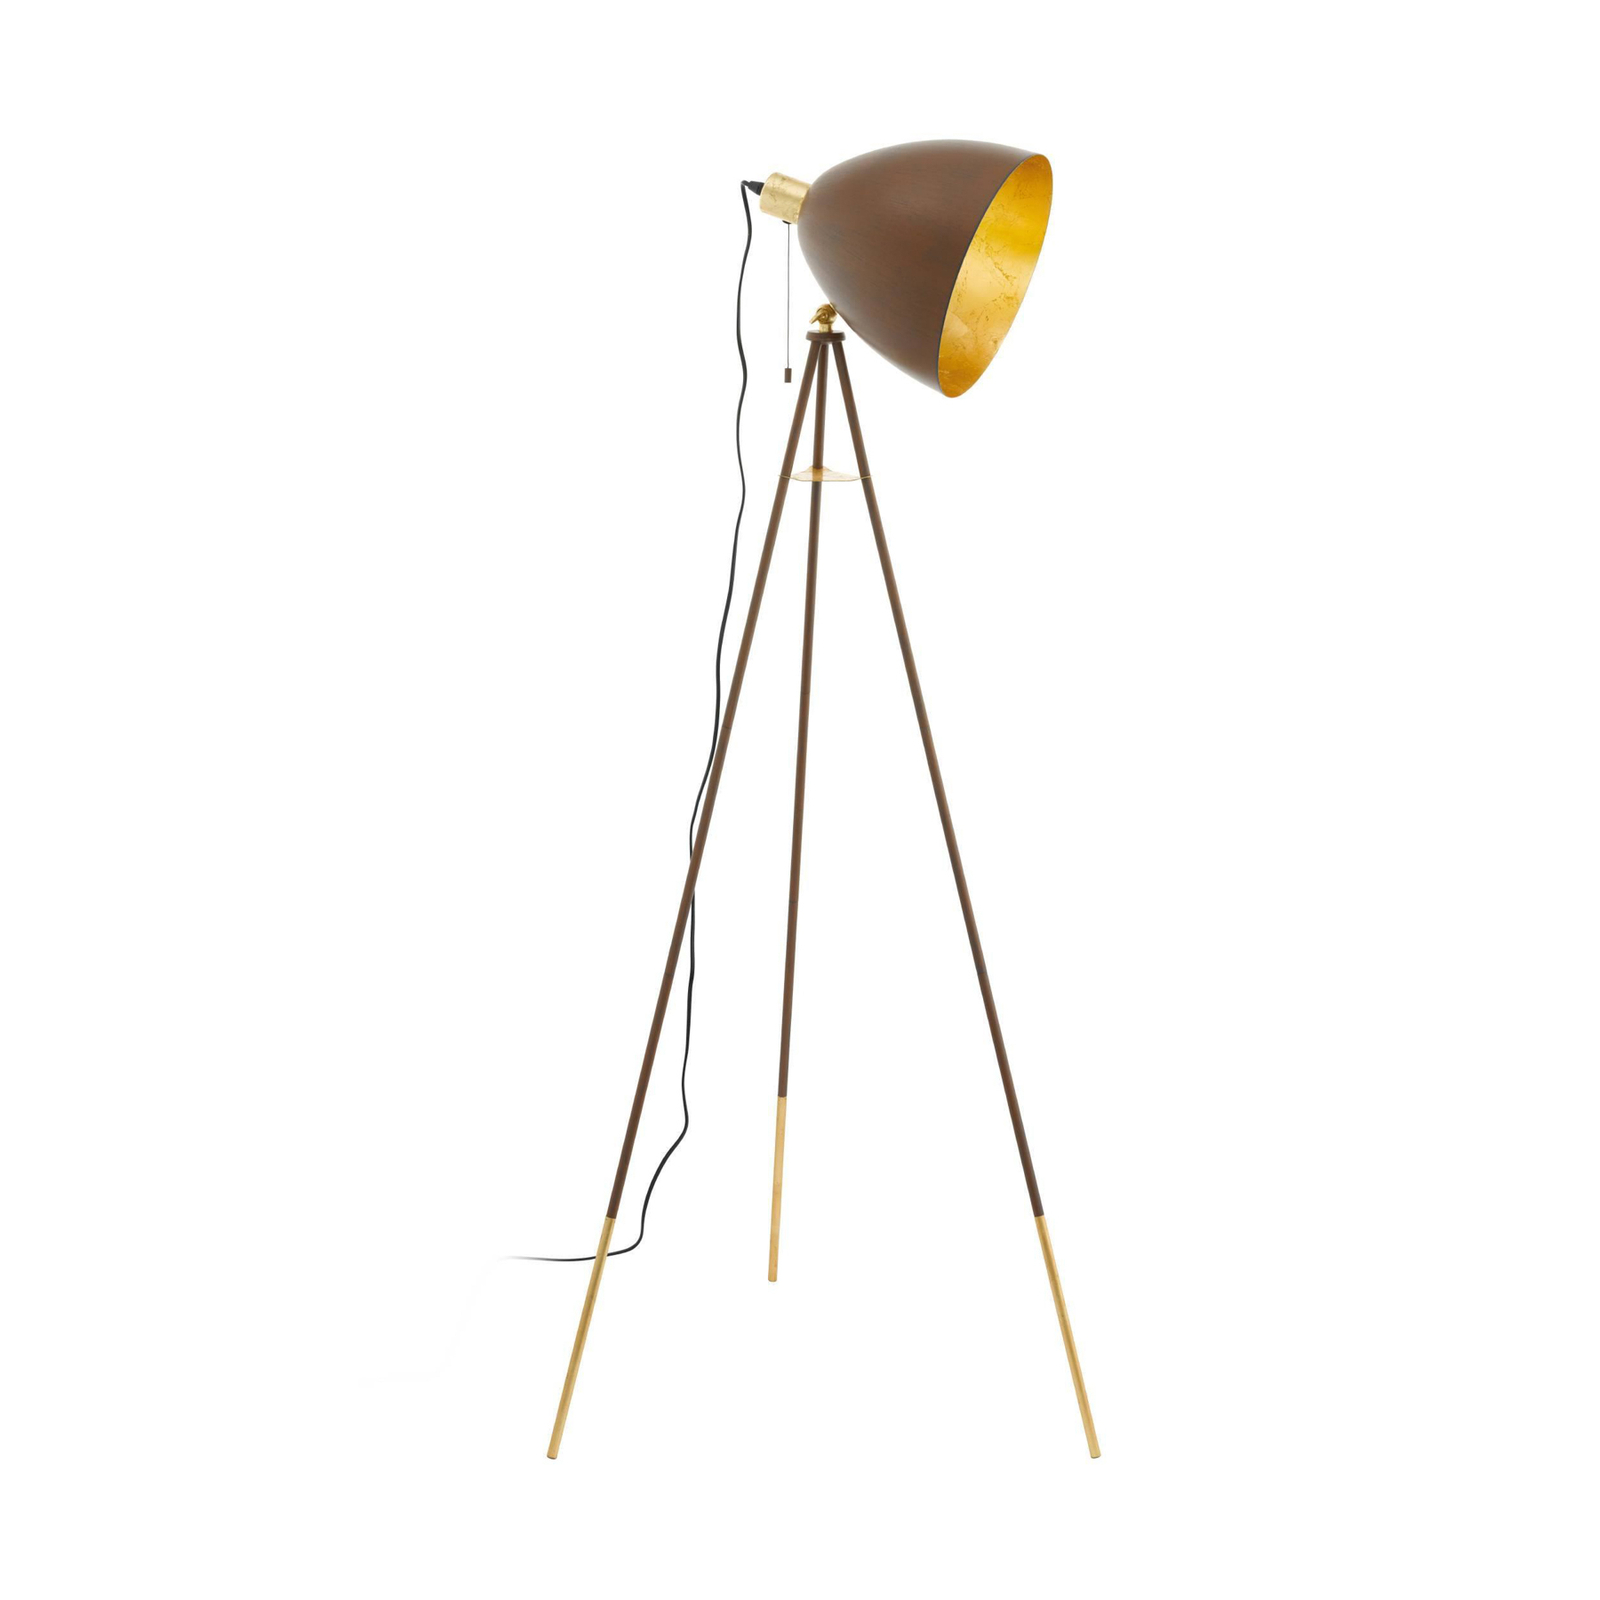 Stehlampe Chester, Höhe 149 cm, rostfarben/goldfarben, Stahl